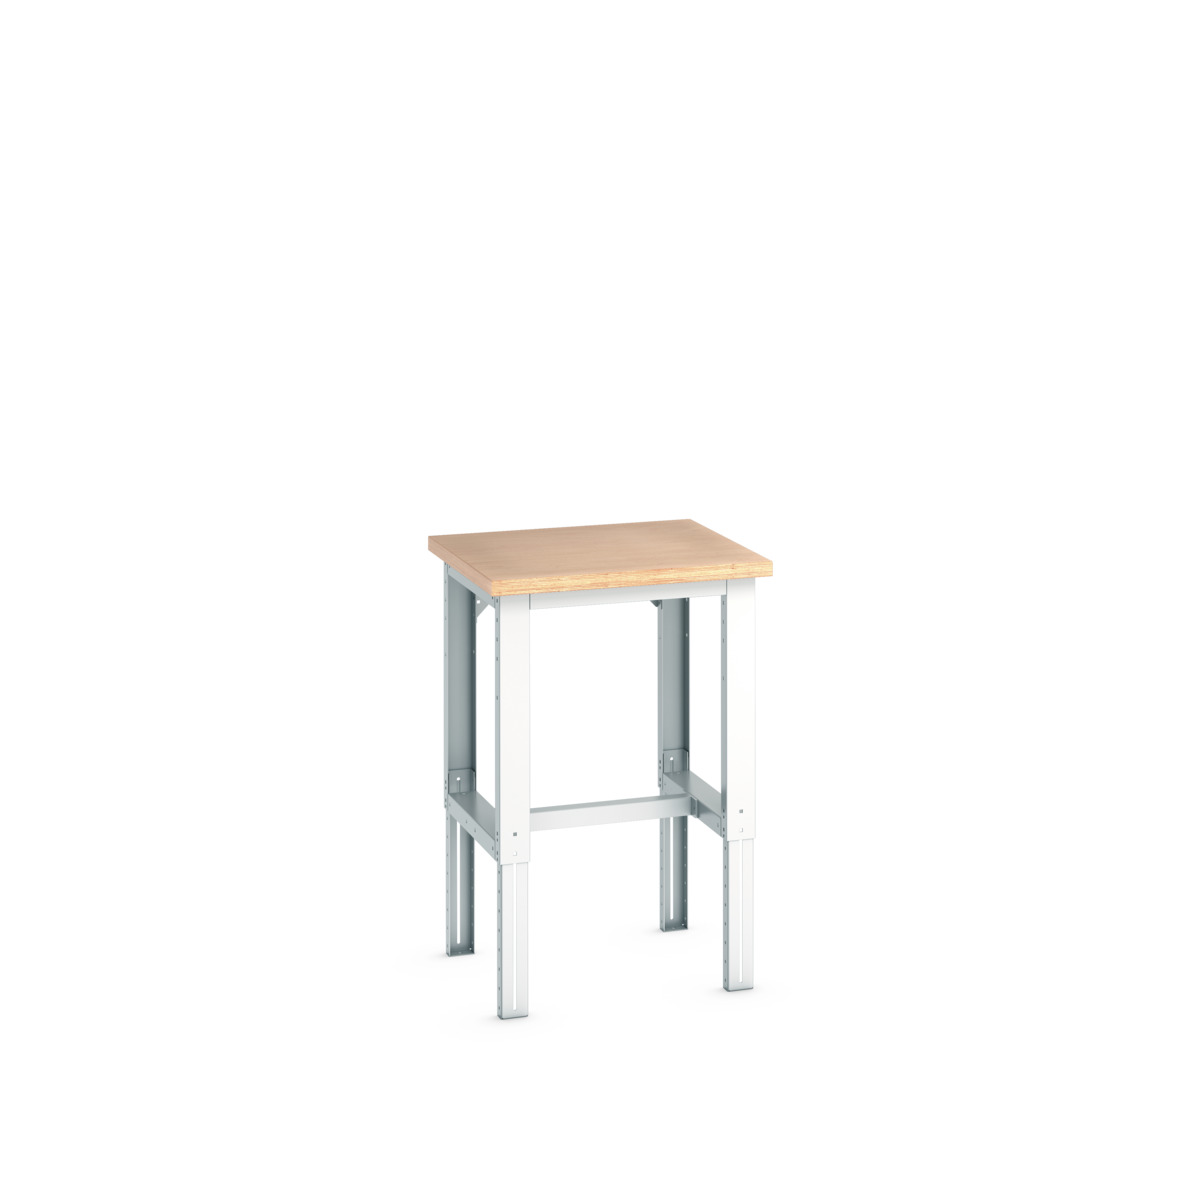 41003046.16V - cubio framework bench adj height (mpx)